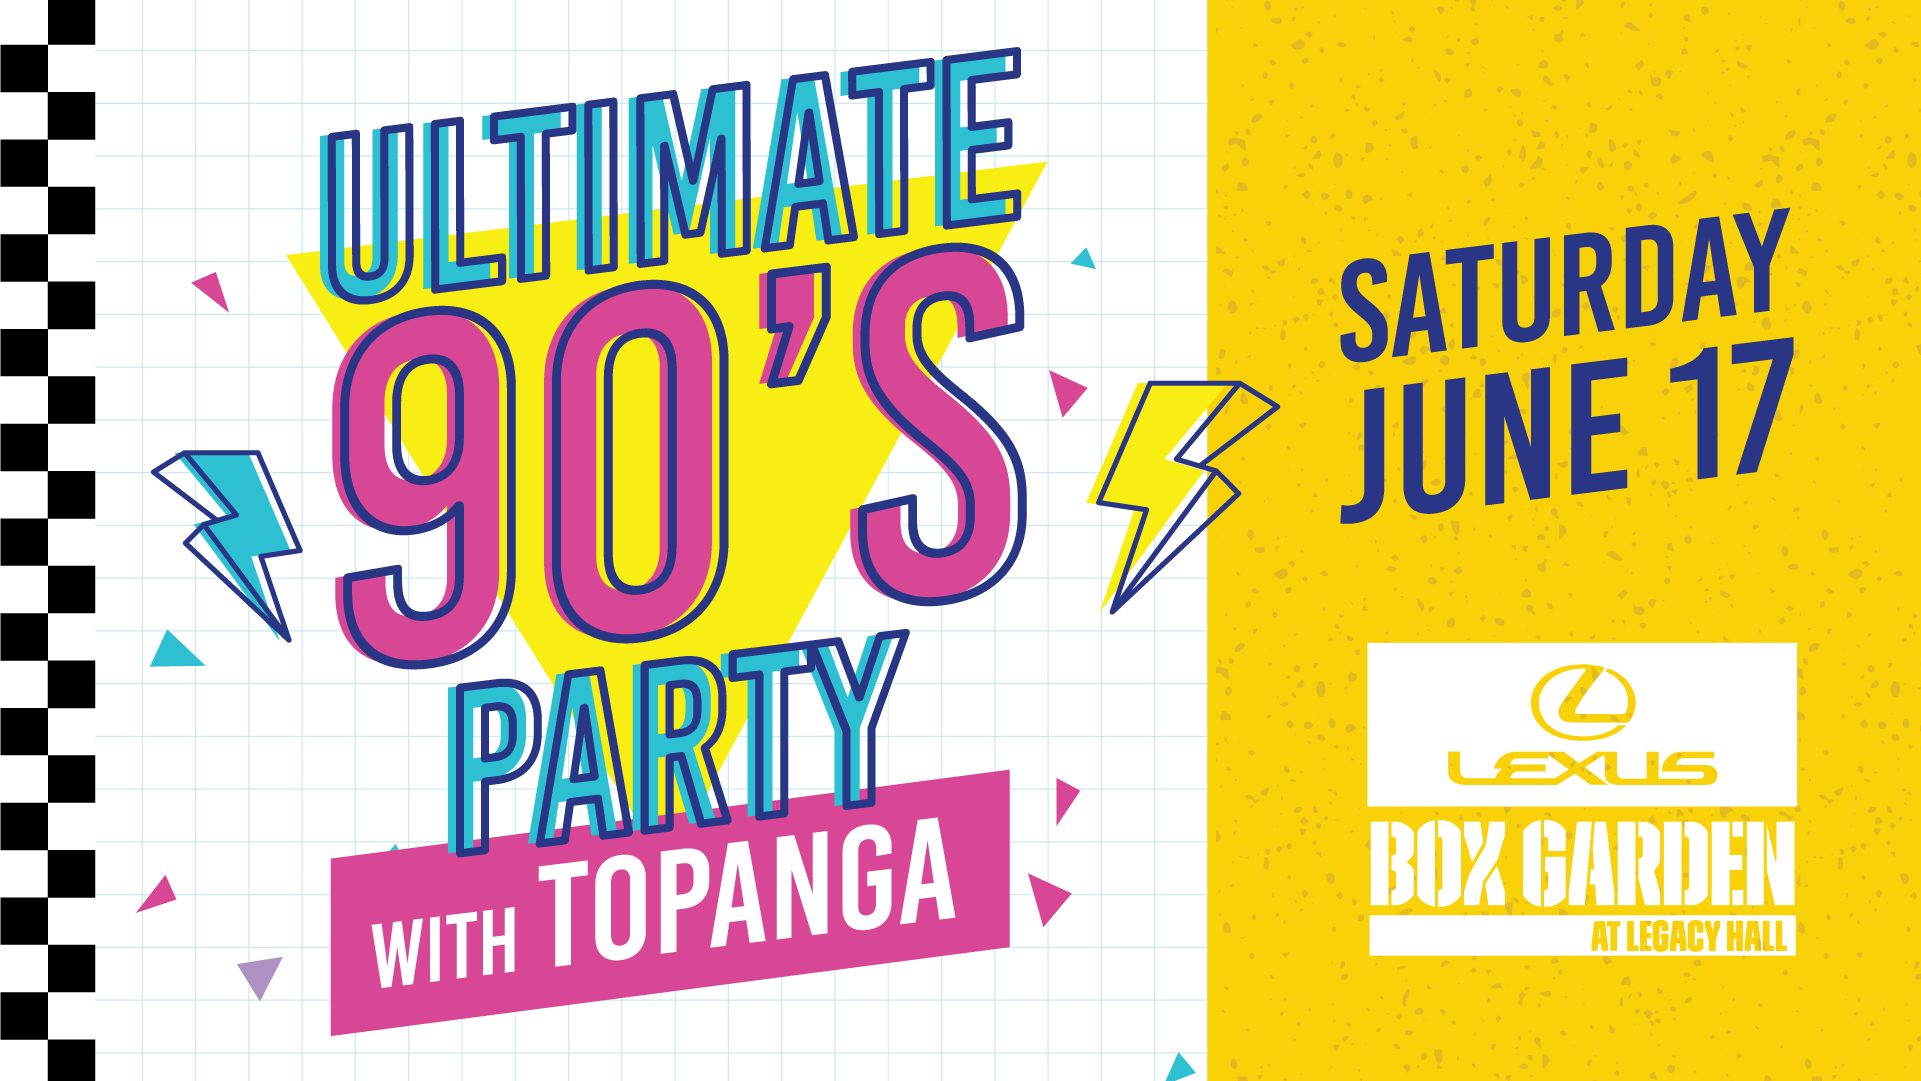 Ultimate 90s Party with Topanga - hero